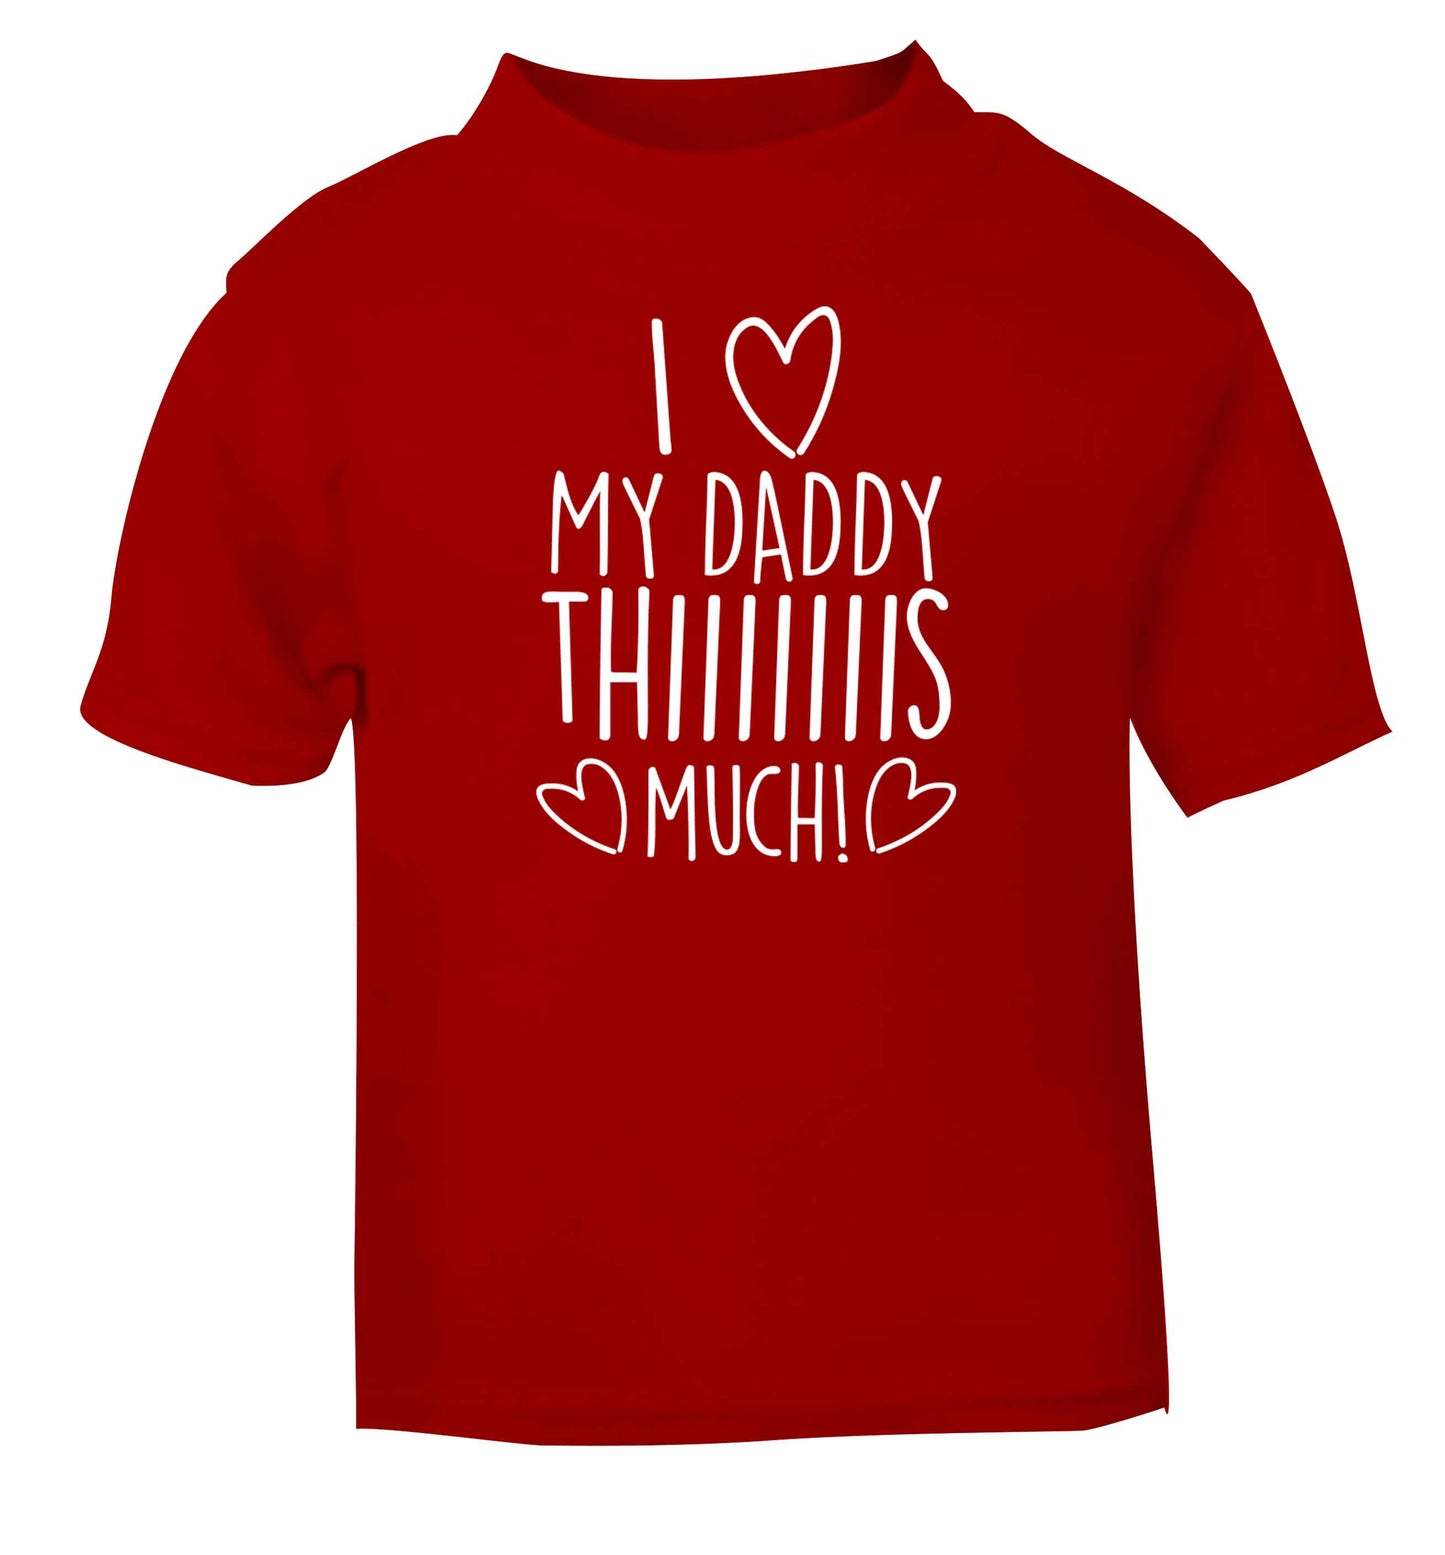 I love my daddy thiiiiis much! red baby toddler Tshirt 2 Years